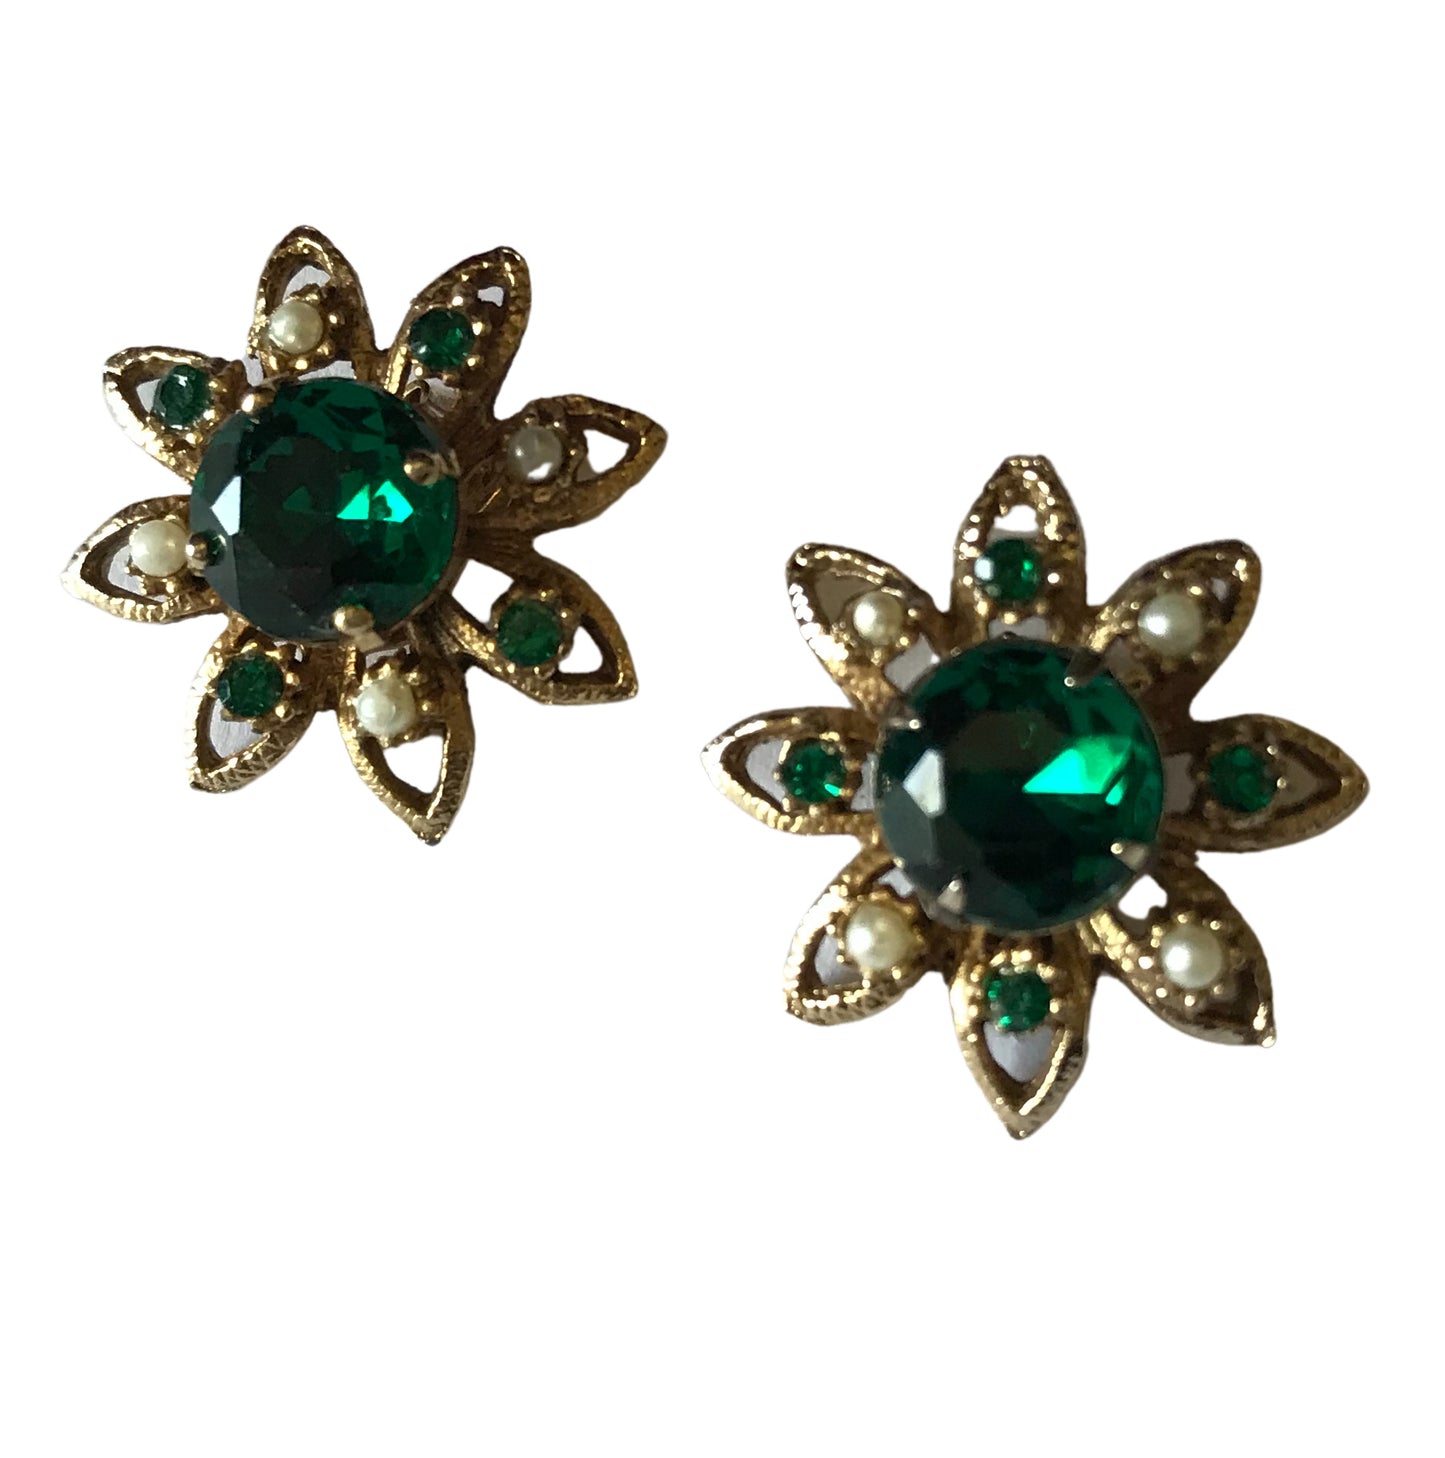 Glamorous Deep Green Rhinestone and Faux Pearl Flower Shaped Clip Earrings circa 1960s